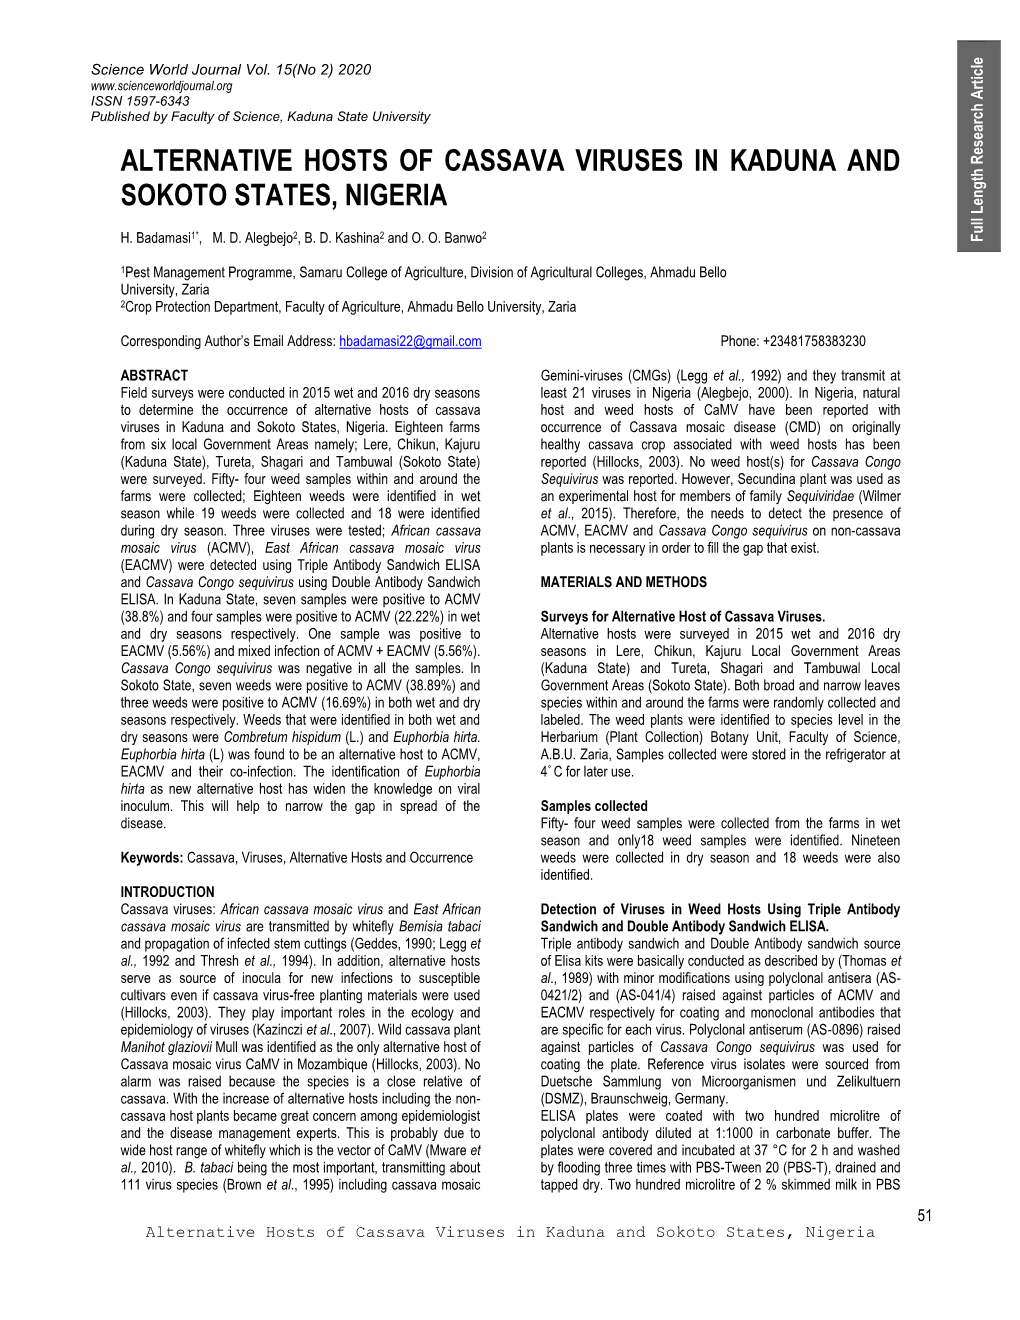 Alternative Hosts of Cassava Viruses in Kaduna and Sokoto States, Nigeria